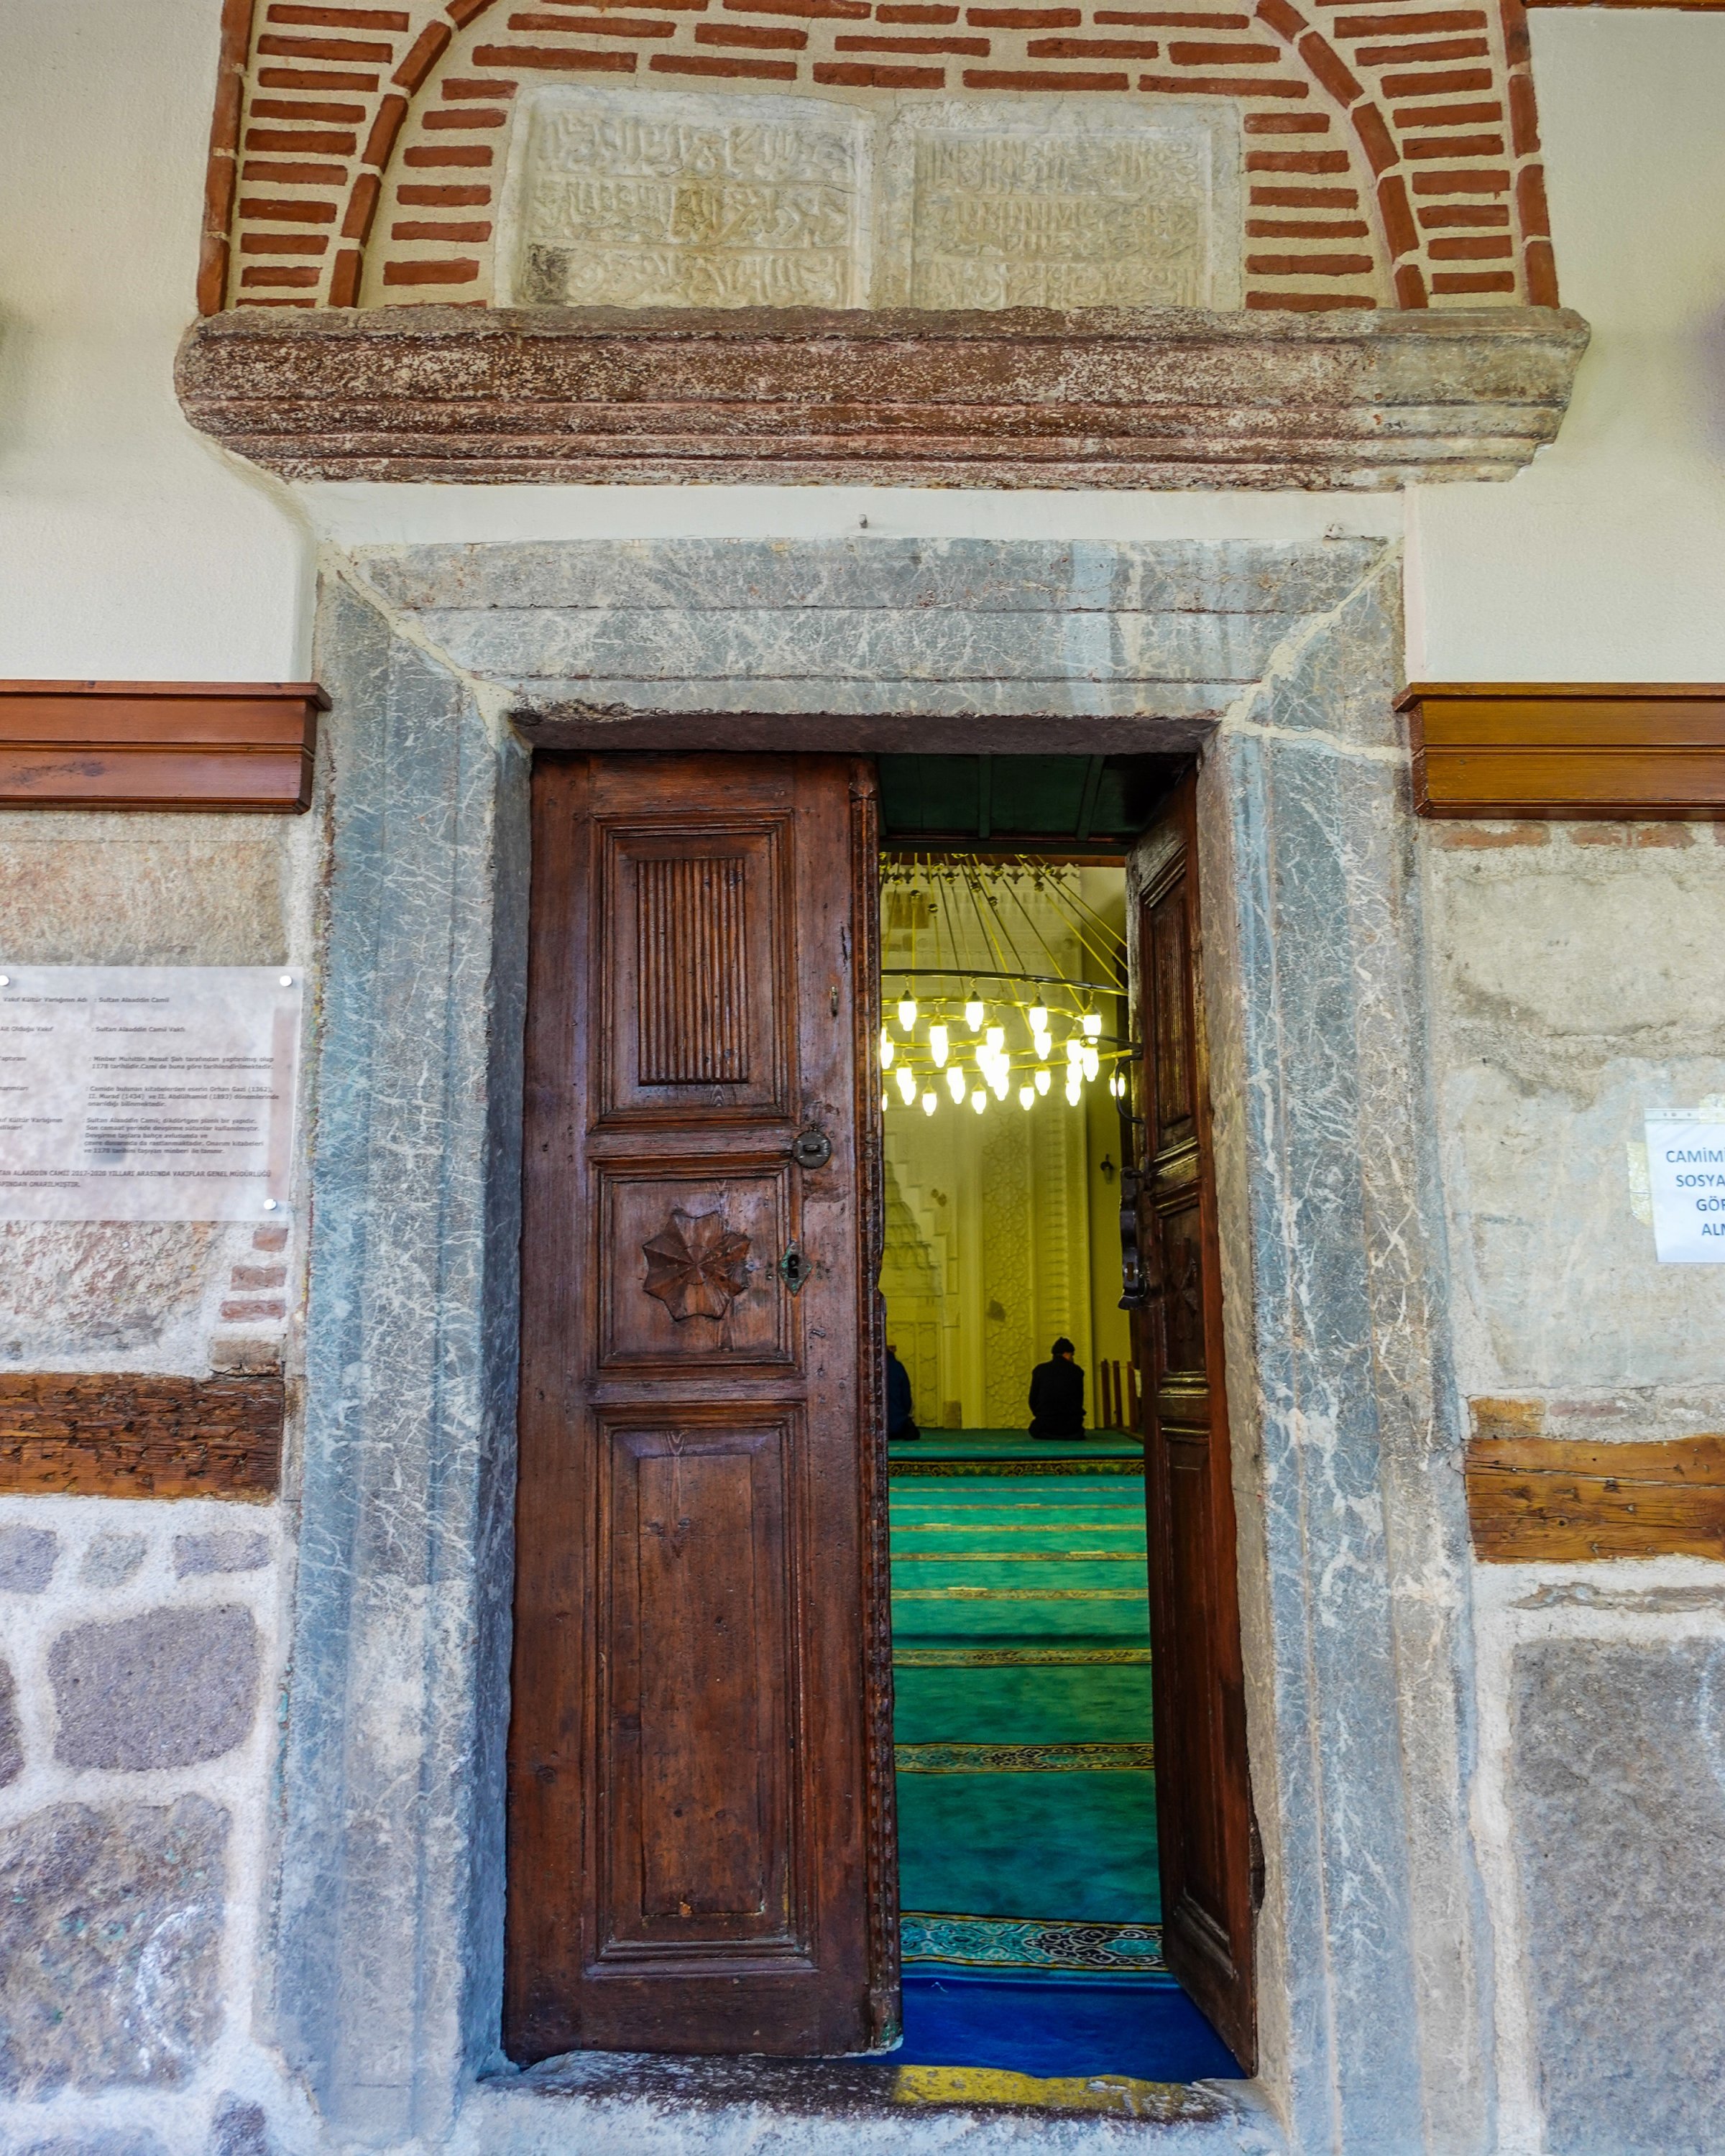 The door of the Sultan Alaaddin Mosque. (Photo by Argun Konuk)